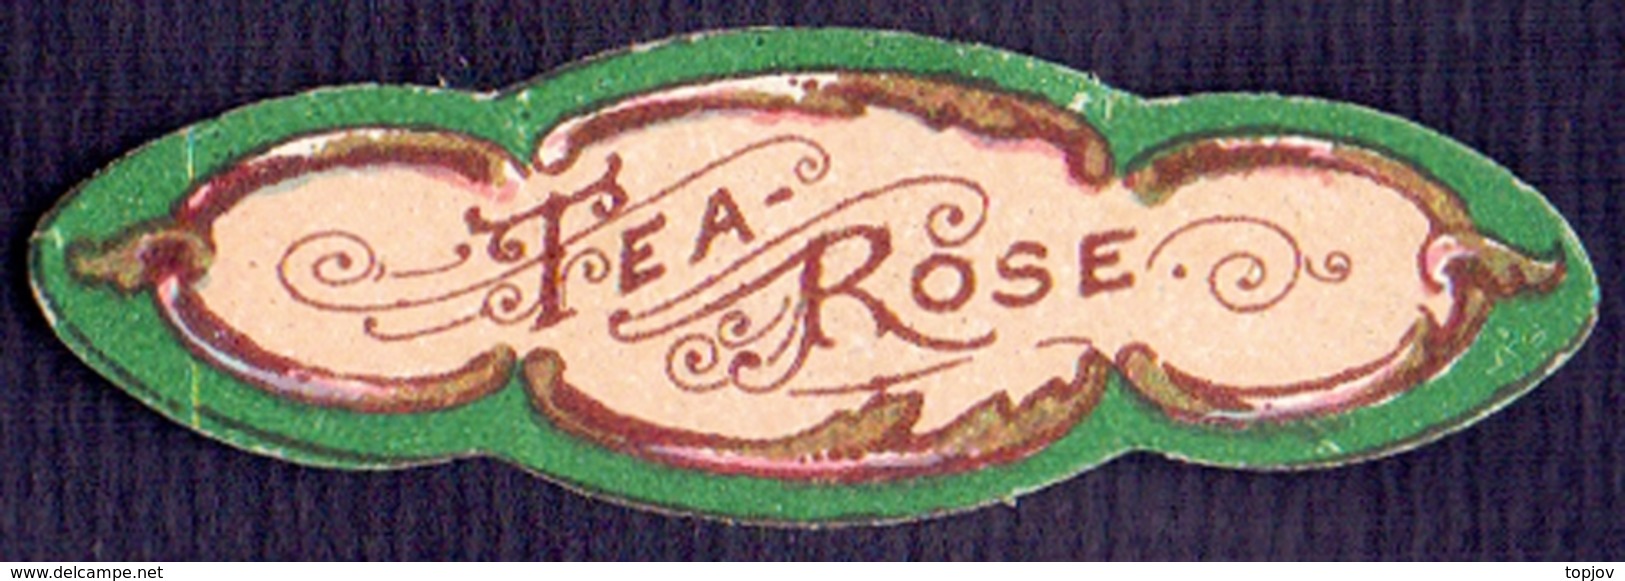 PRINT From J. STERN BERLIN -  TEA  ROSE - Cc 1910/15 - Etiquettes